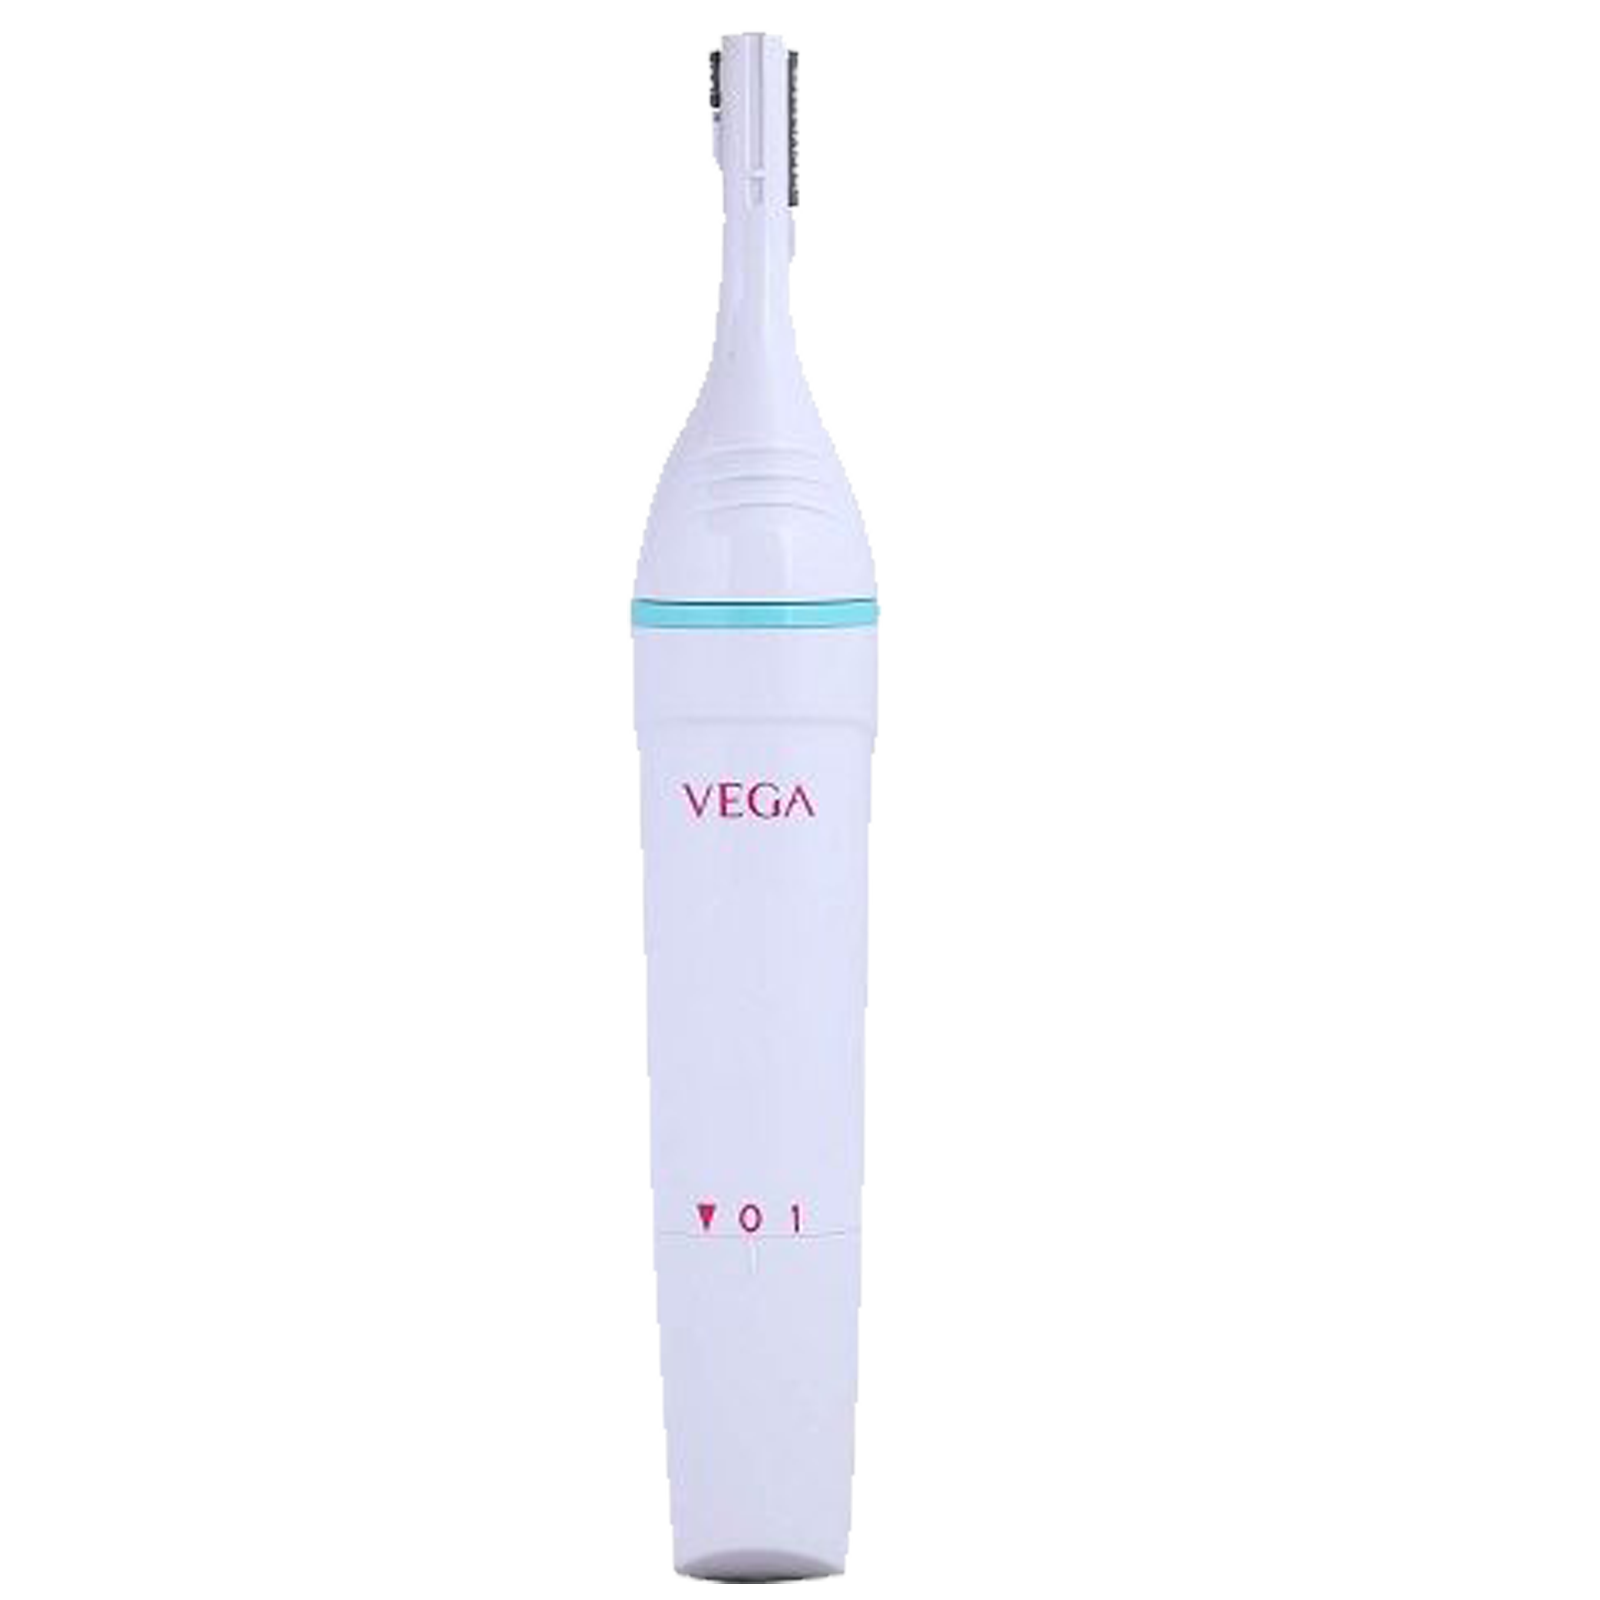 Vega Silk Touch Stainless Steel Blades Cordless Trimmer (250 Min Battery Run Time, VHBT-01, White)